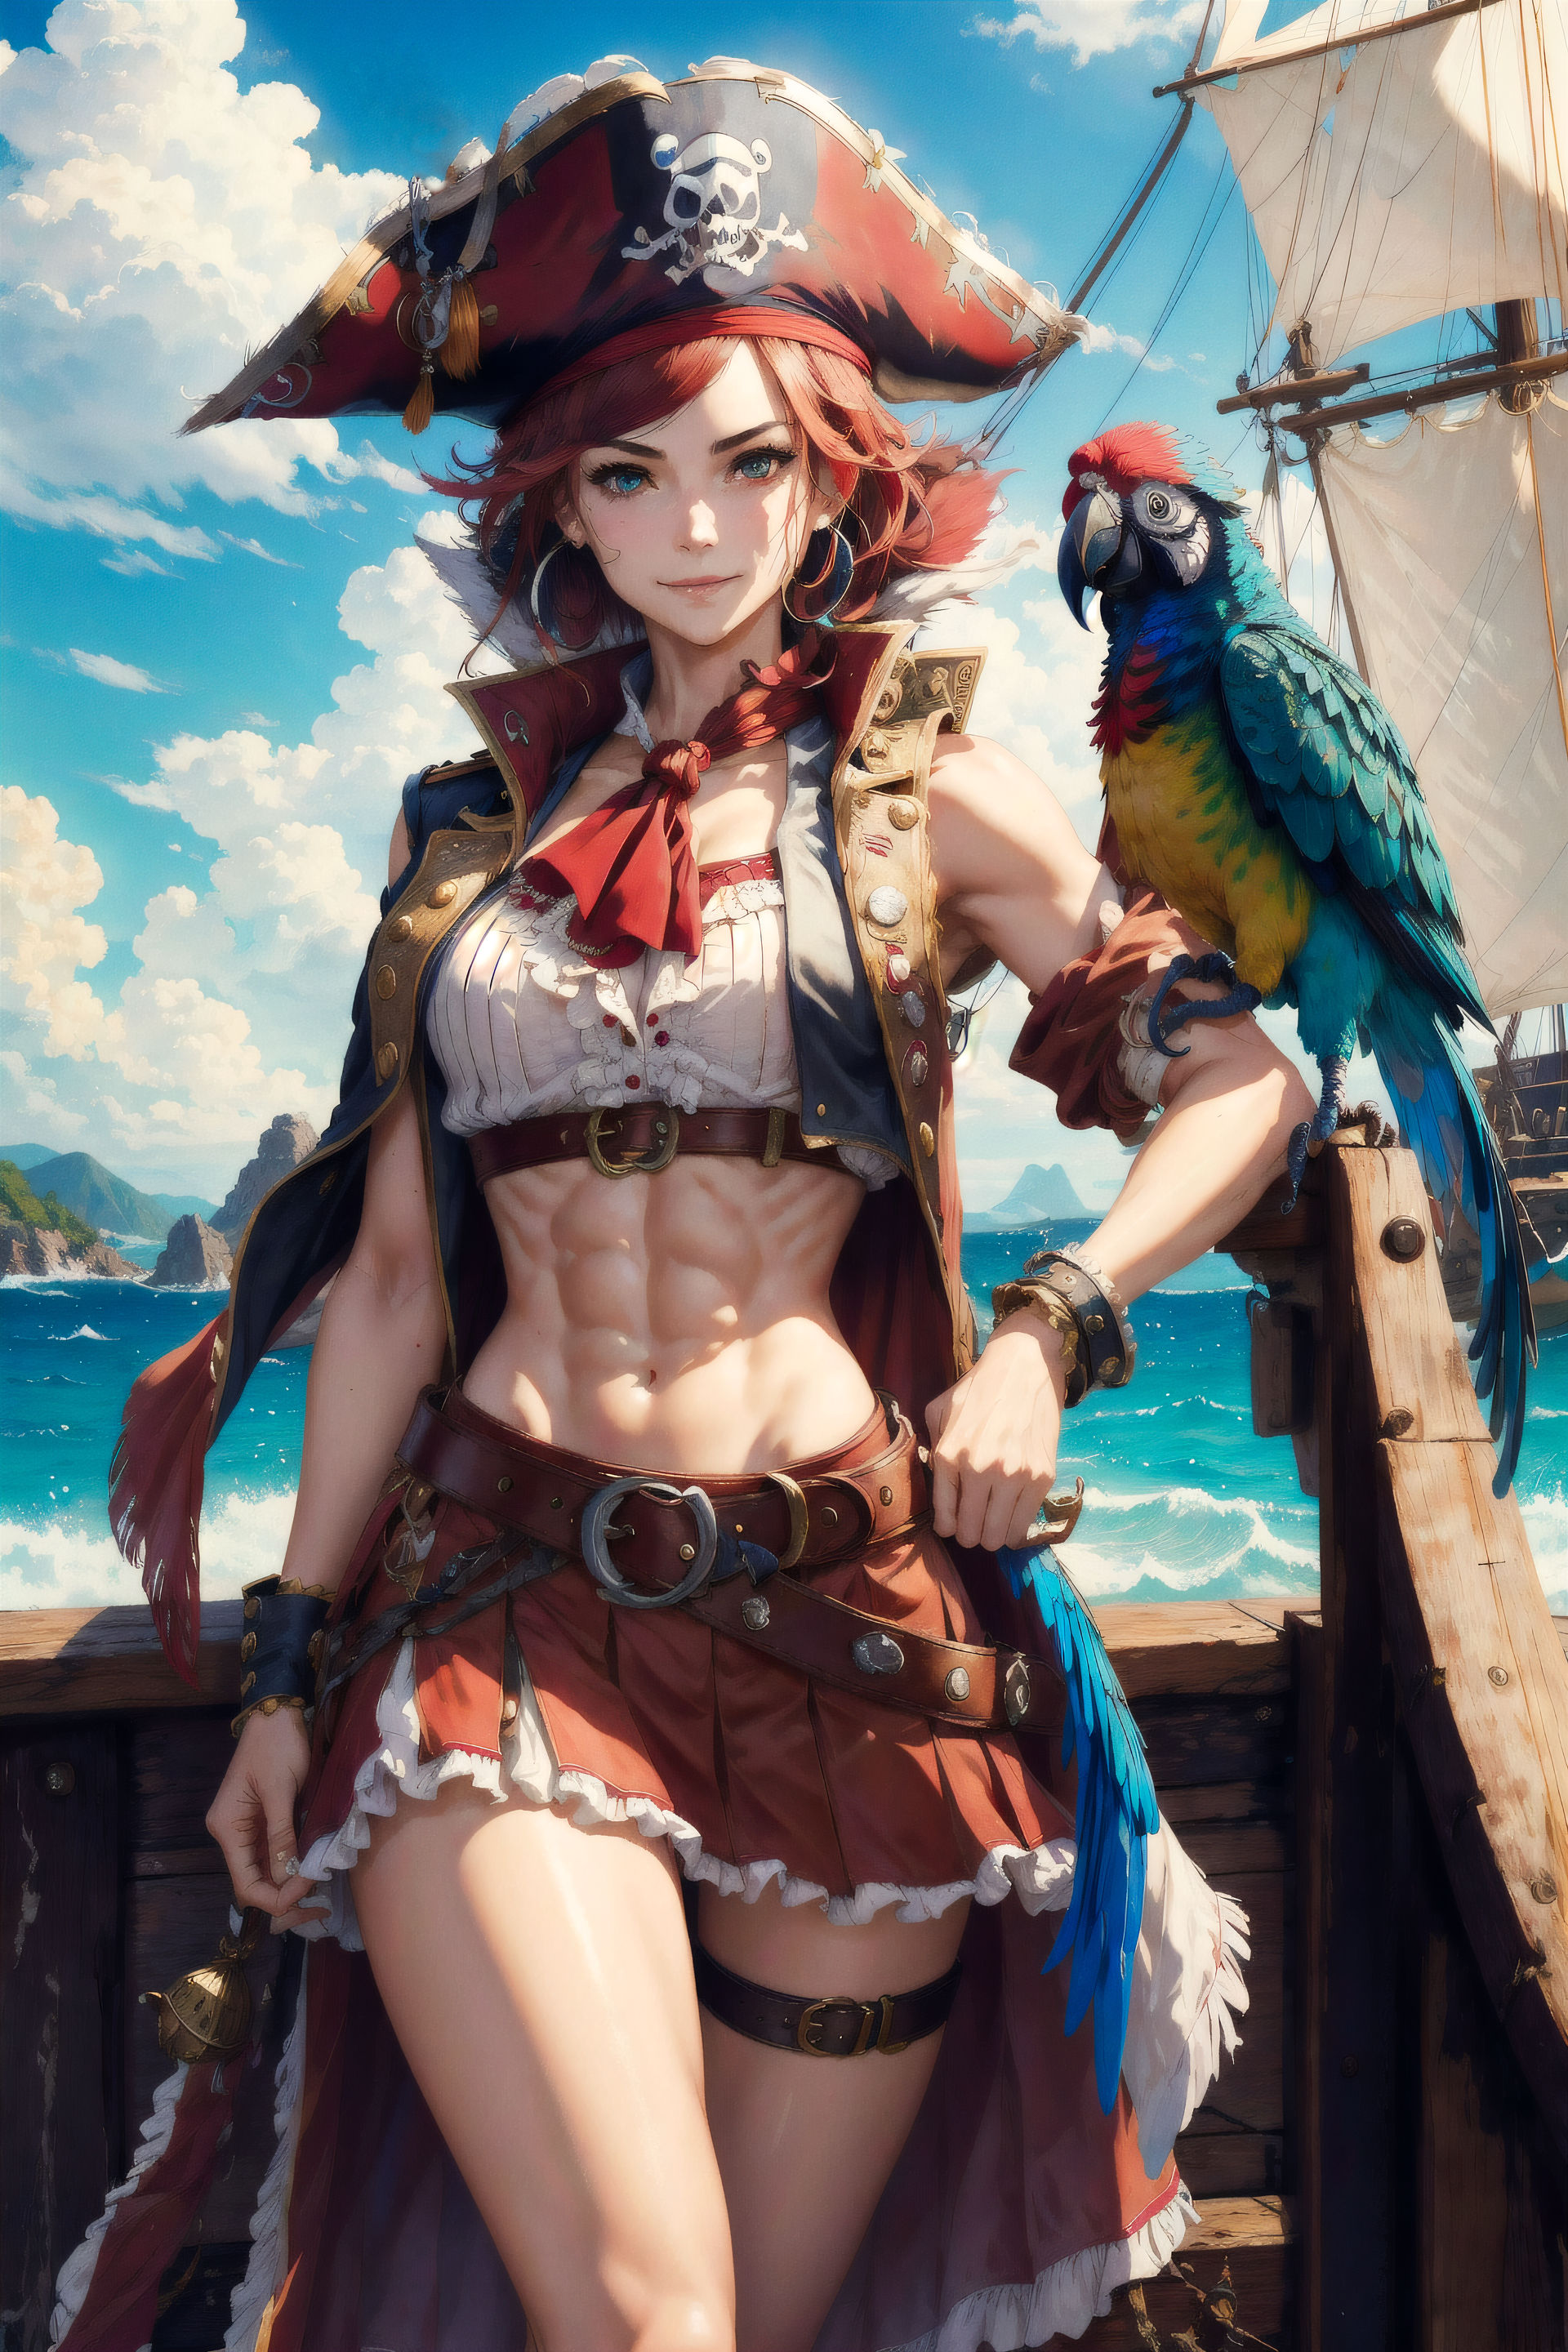 Pirate Captain by SecondHaven on DeviantArt